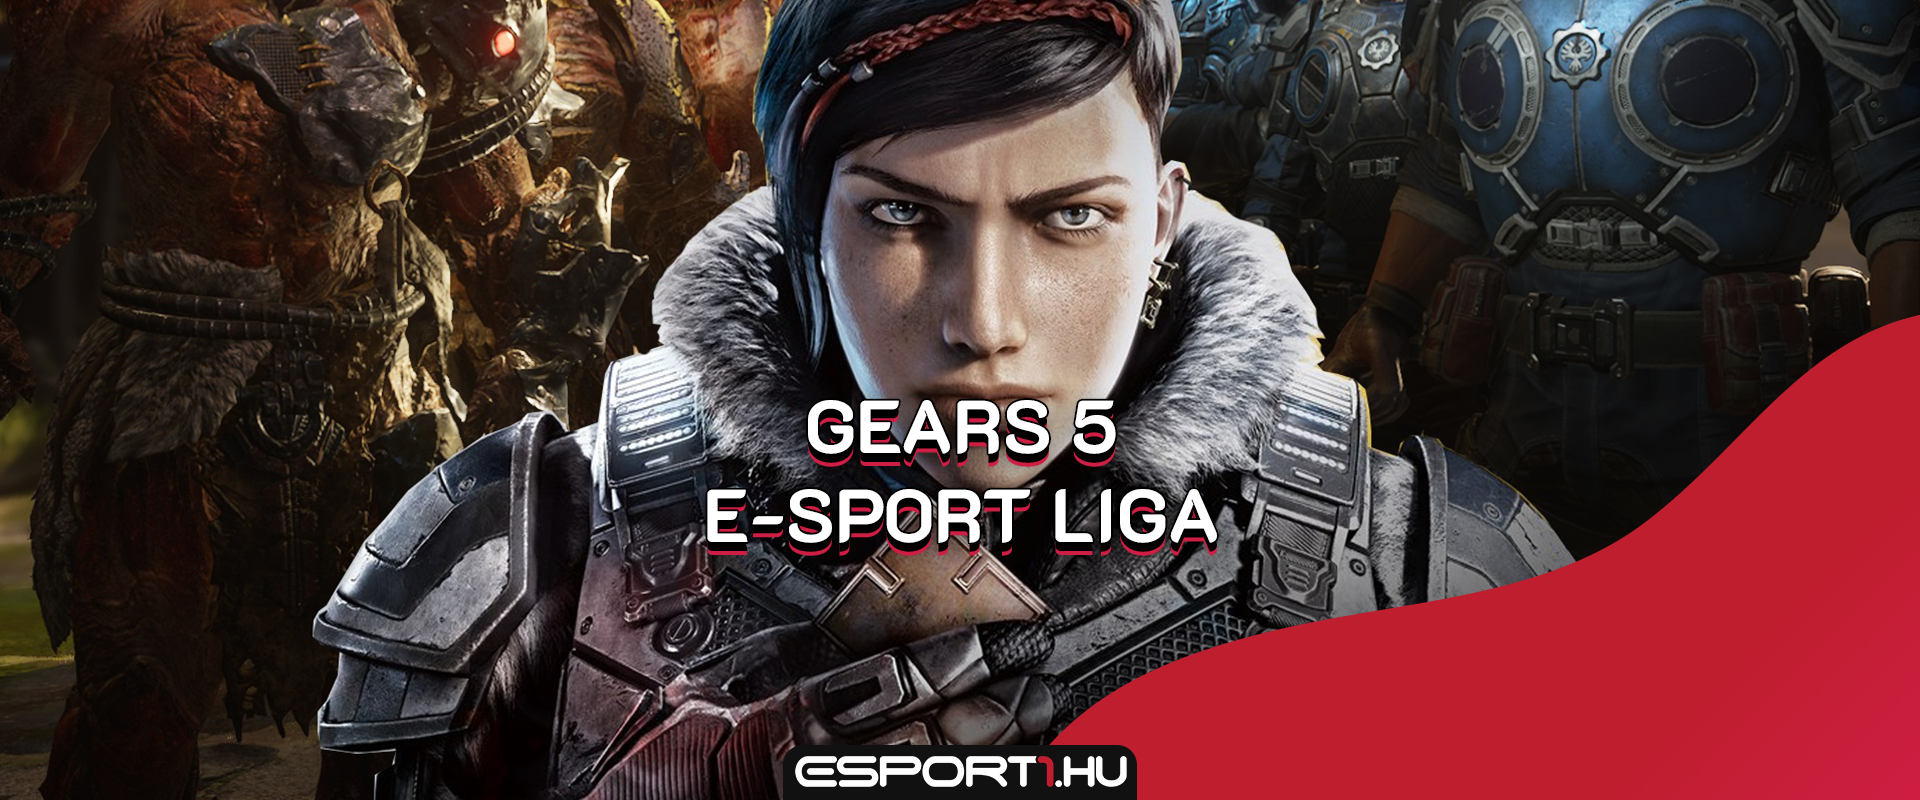 Hivatalos e-sport liga indul Gears 5-ben!